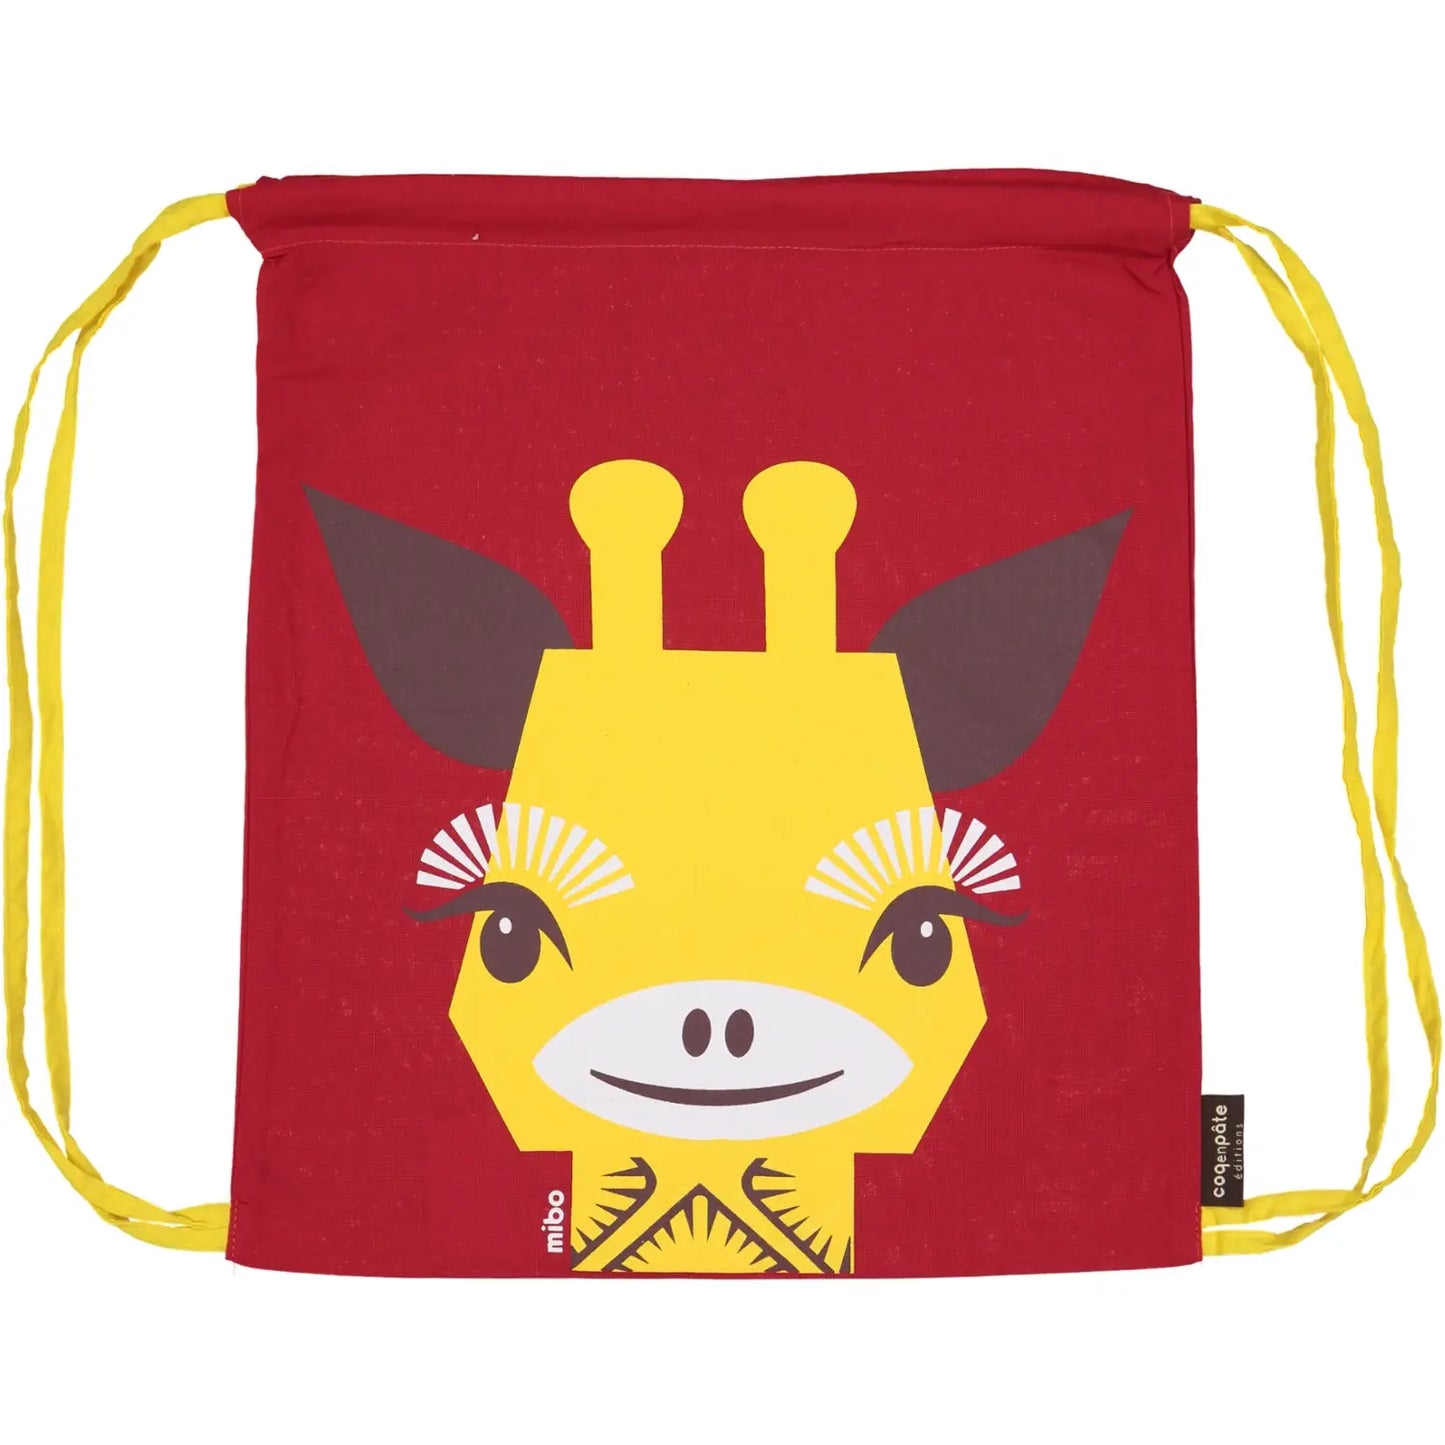 Activity Bag Backpack - Giraffe